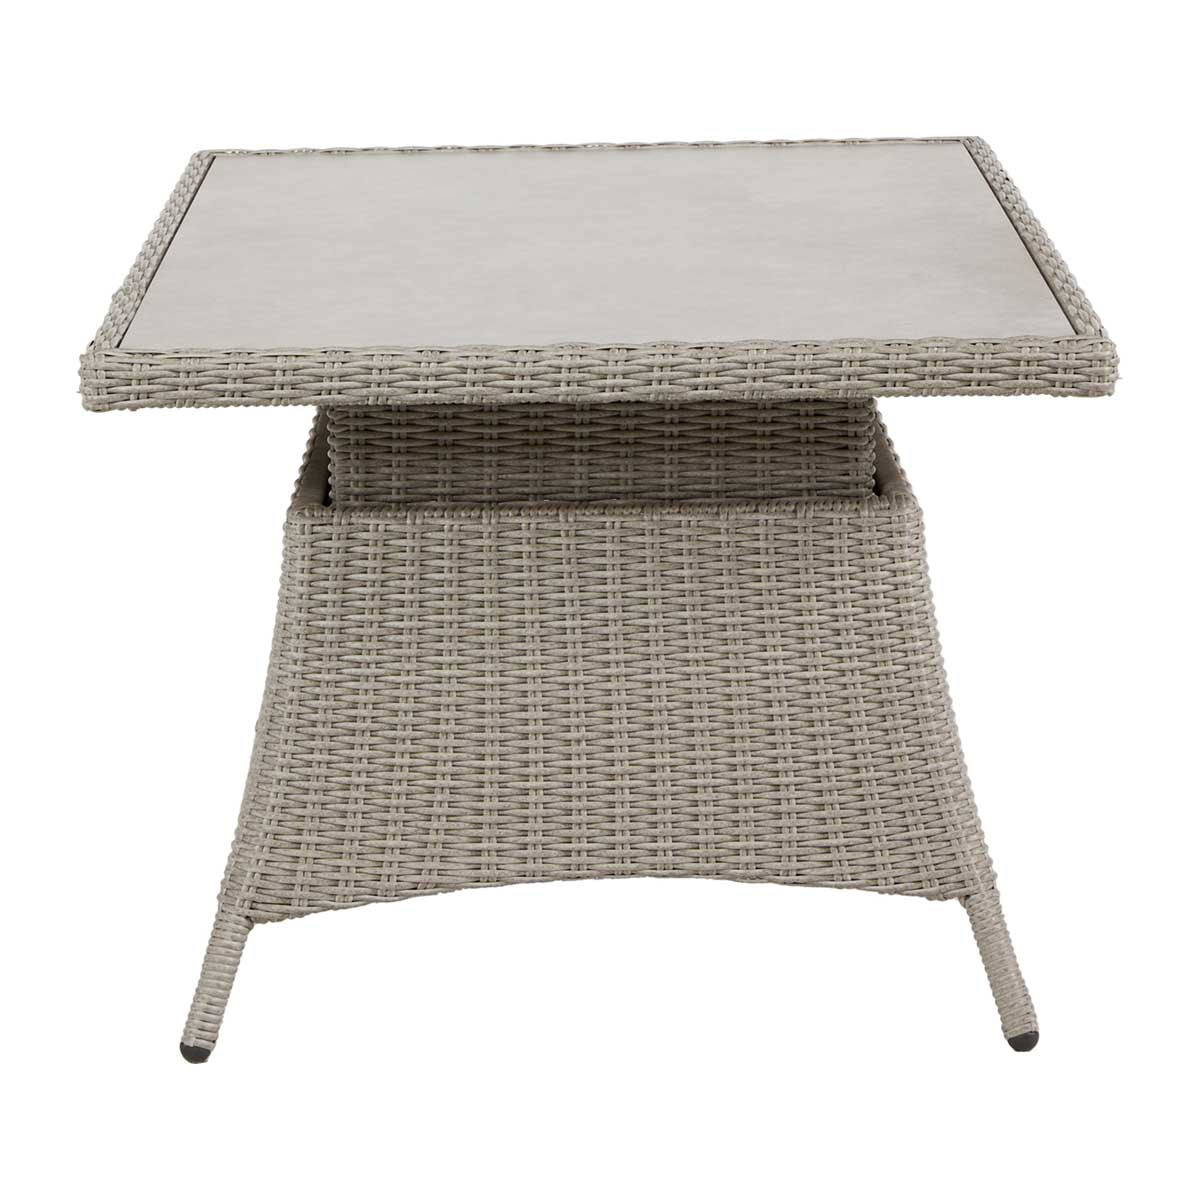 Sumatra Grey Rattan Effect Garden Corner Sofa Set with Adjustable Ceramic Top Table – Click Style